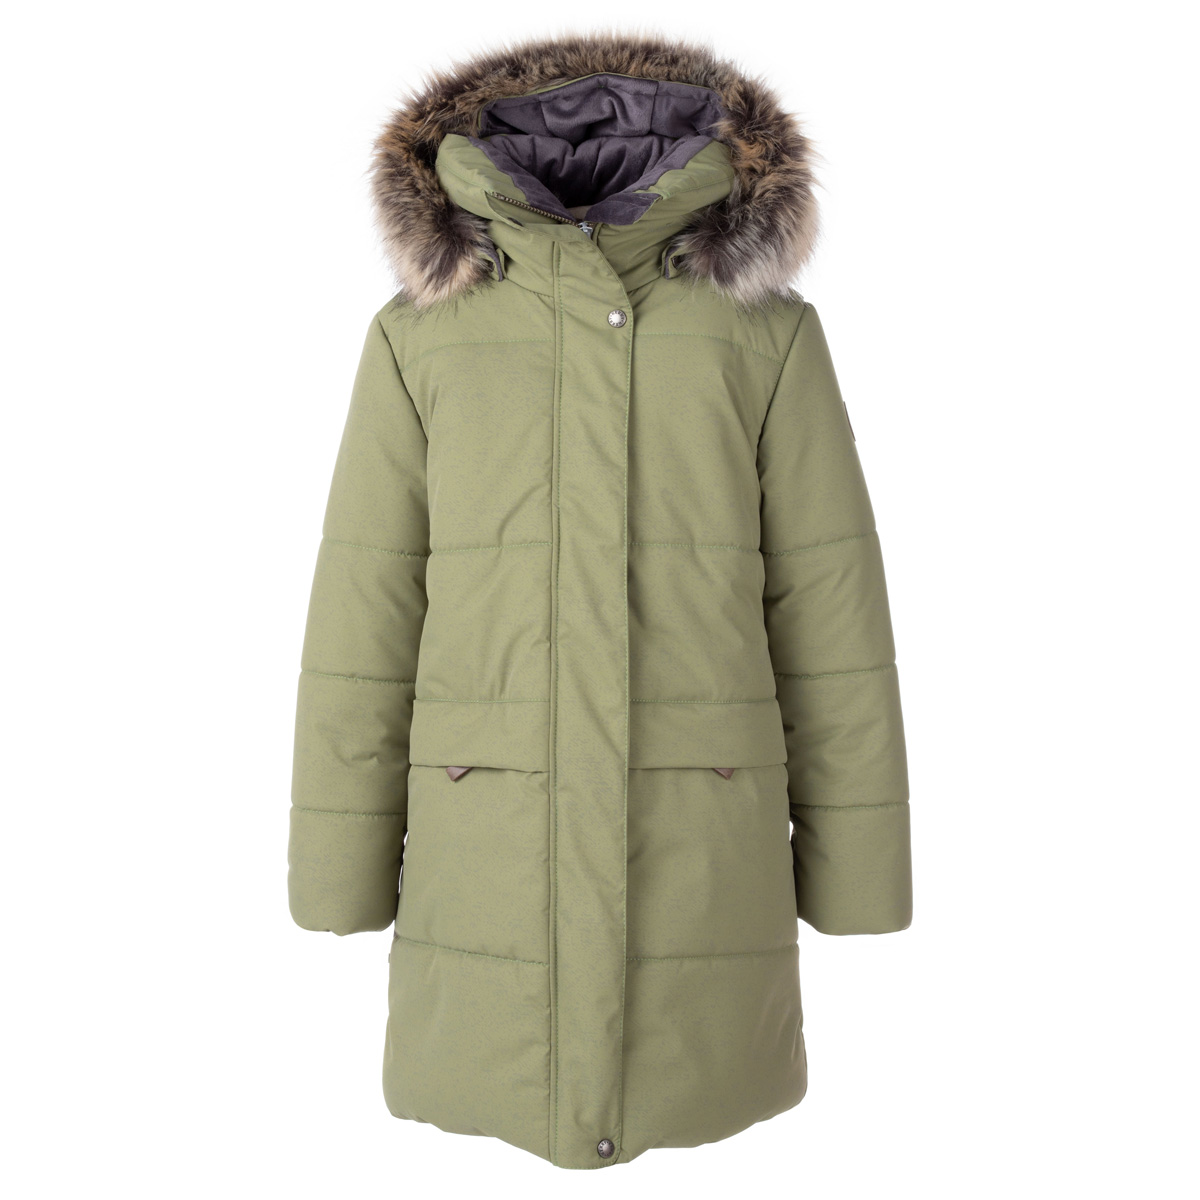 Le-Company winter coat made of reflective fabric - Lenne